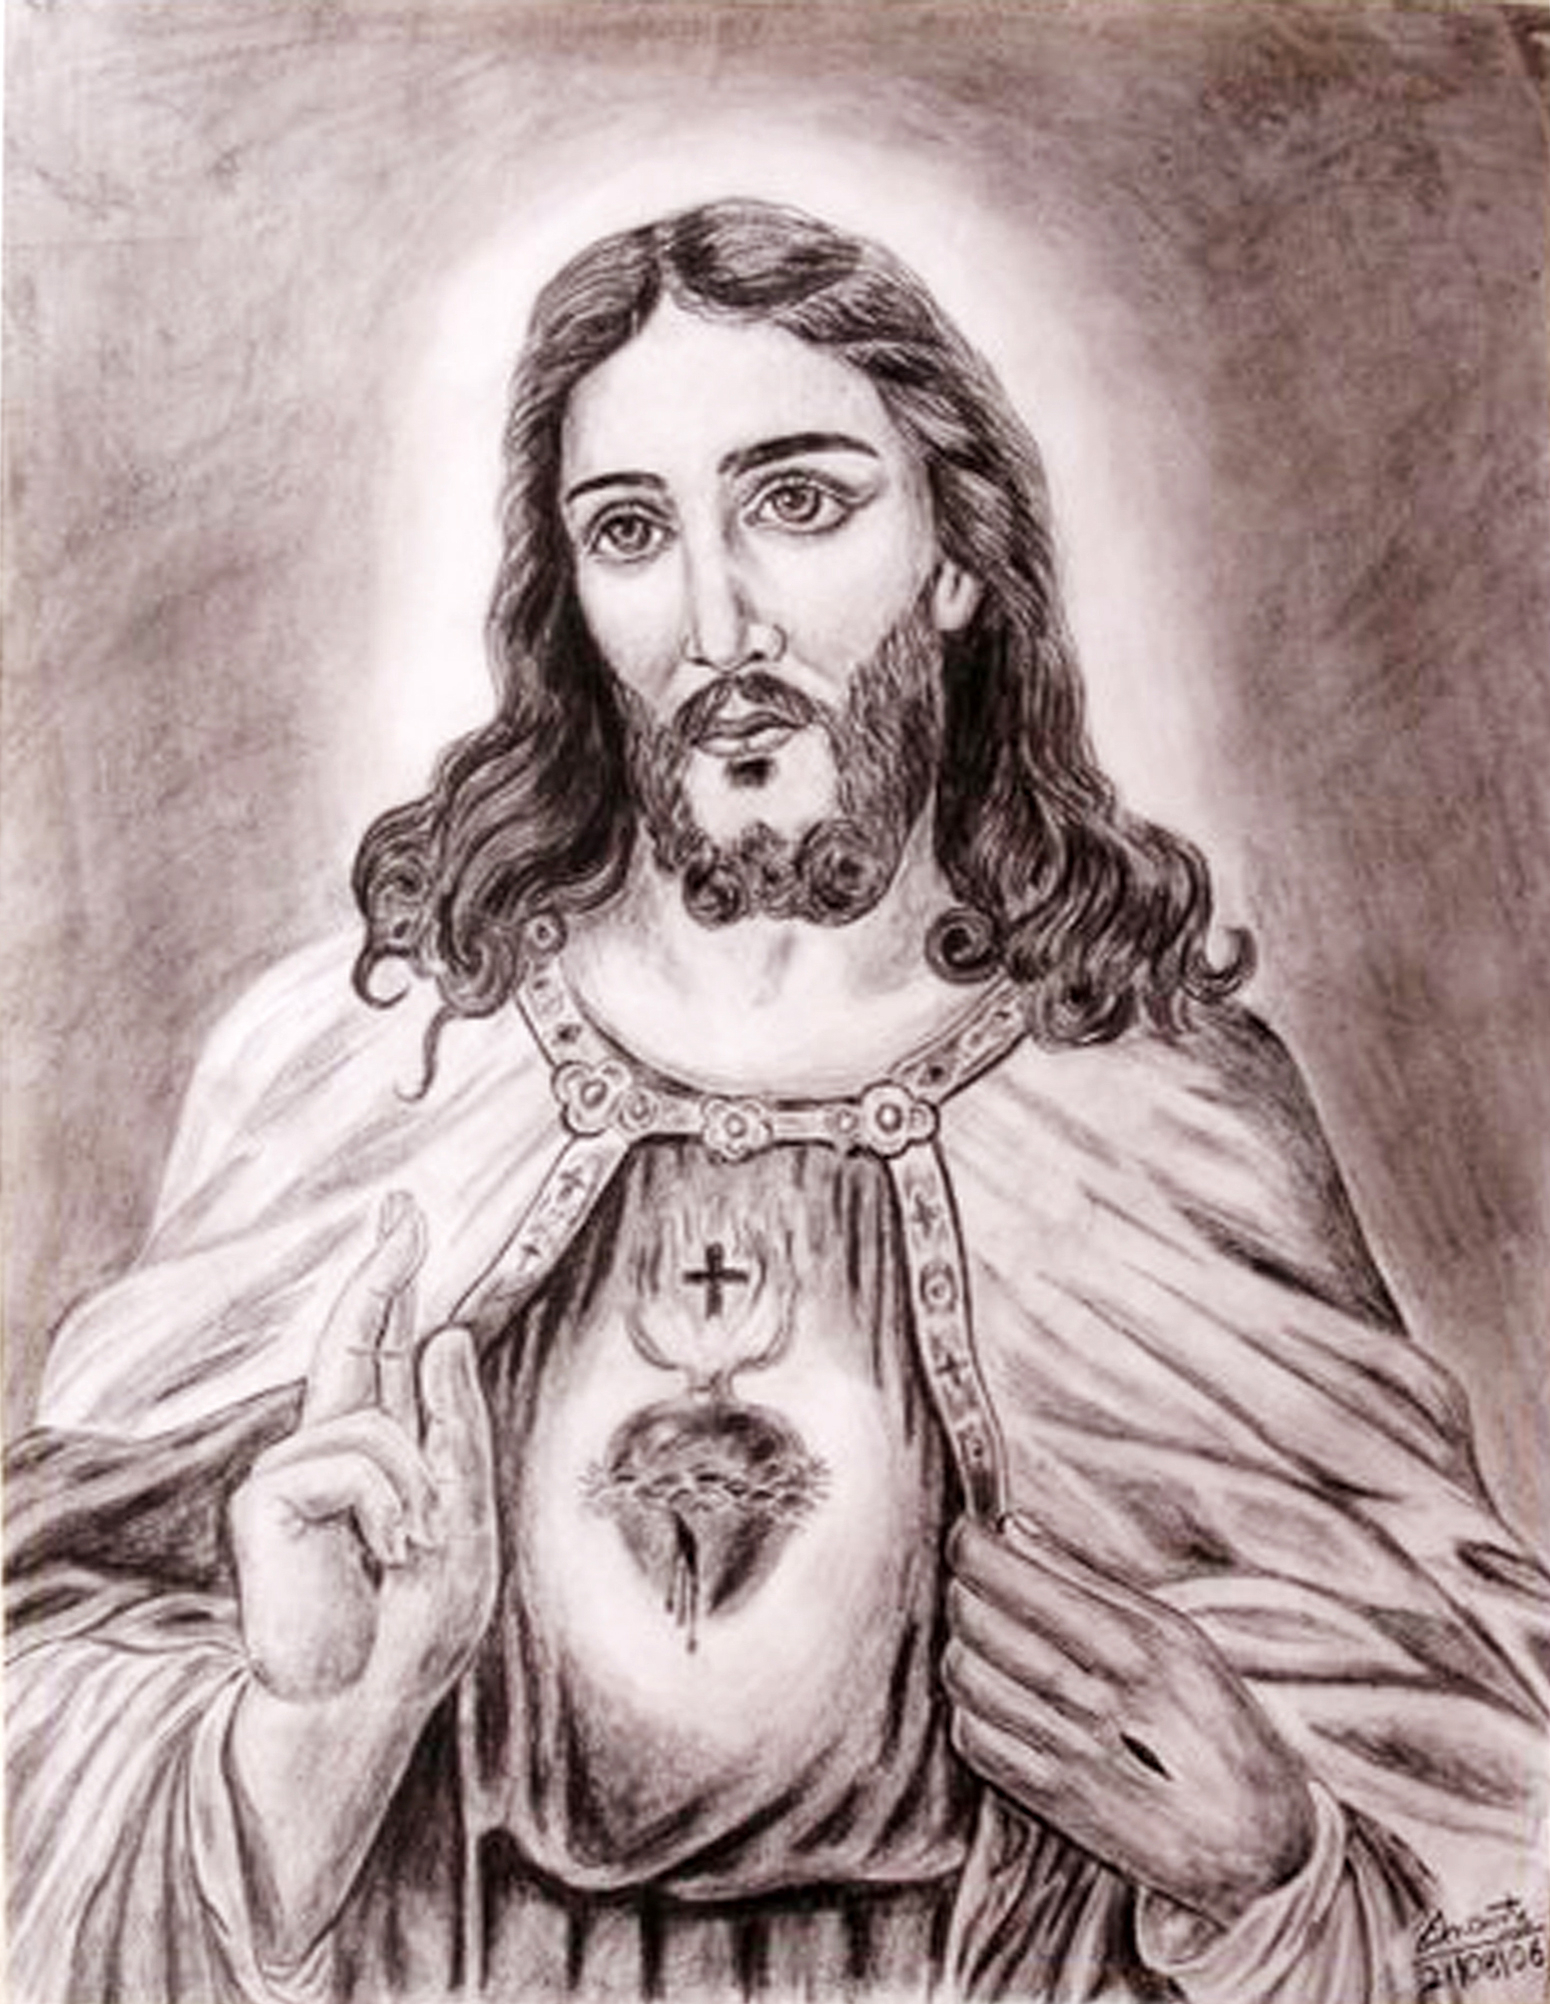 pencil-drawing-of-jesus-christ-at-getdrawings-free-download